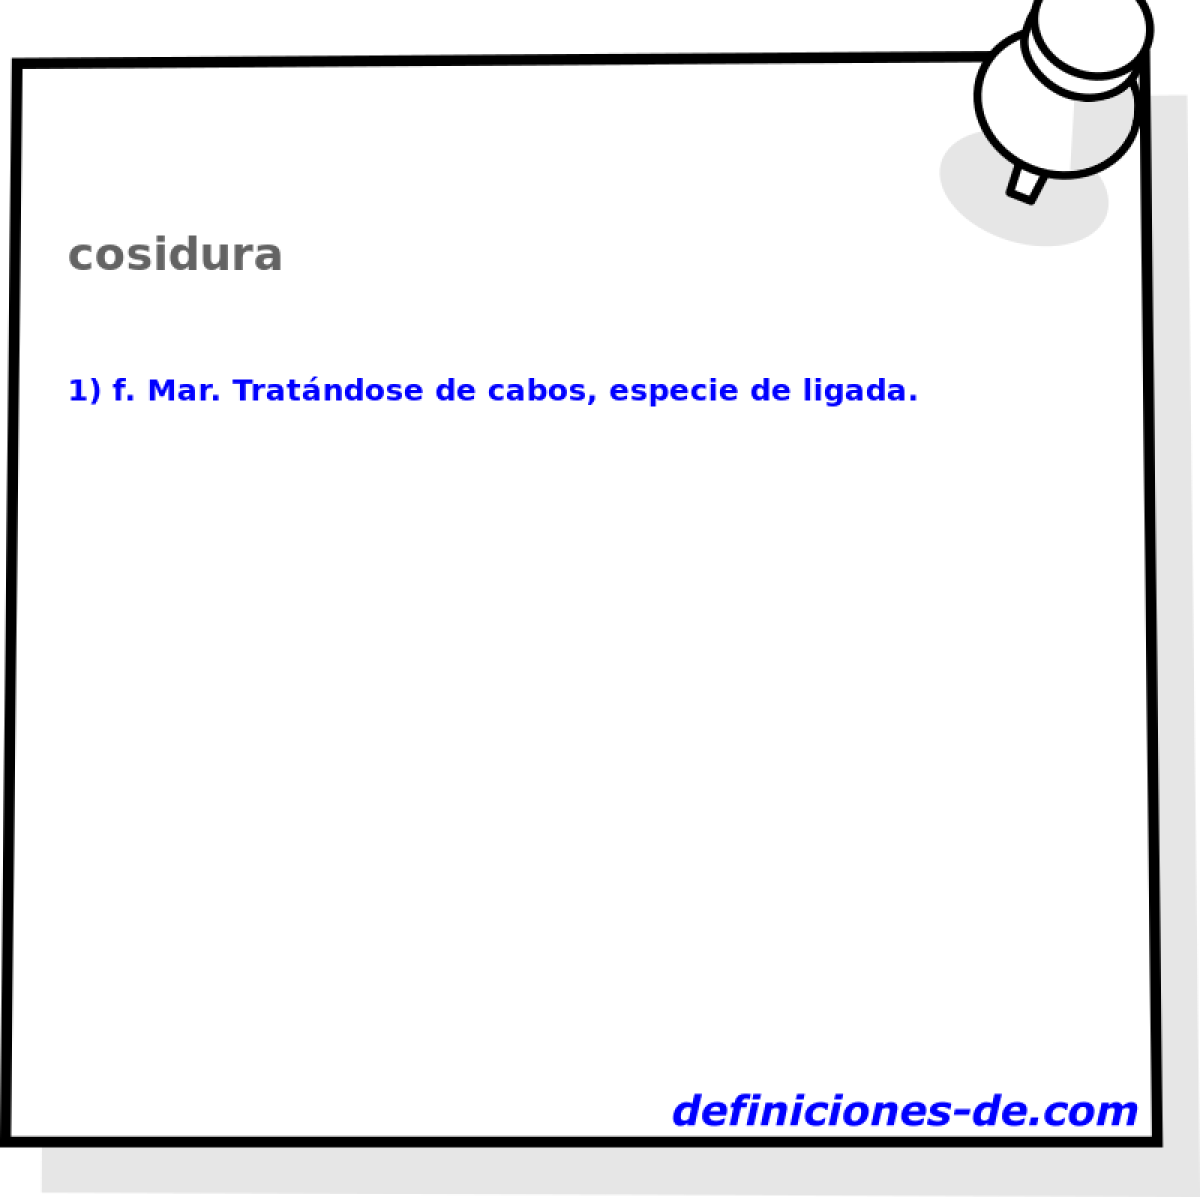 cosidura 